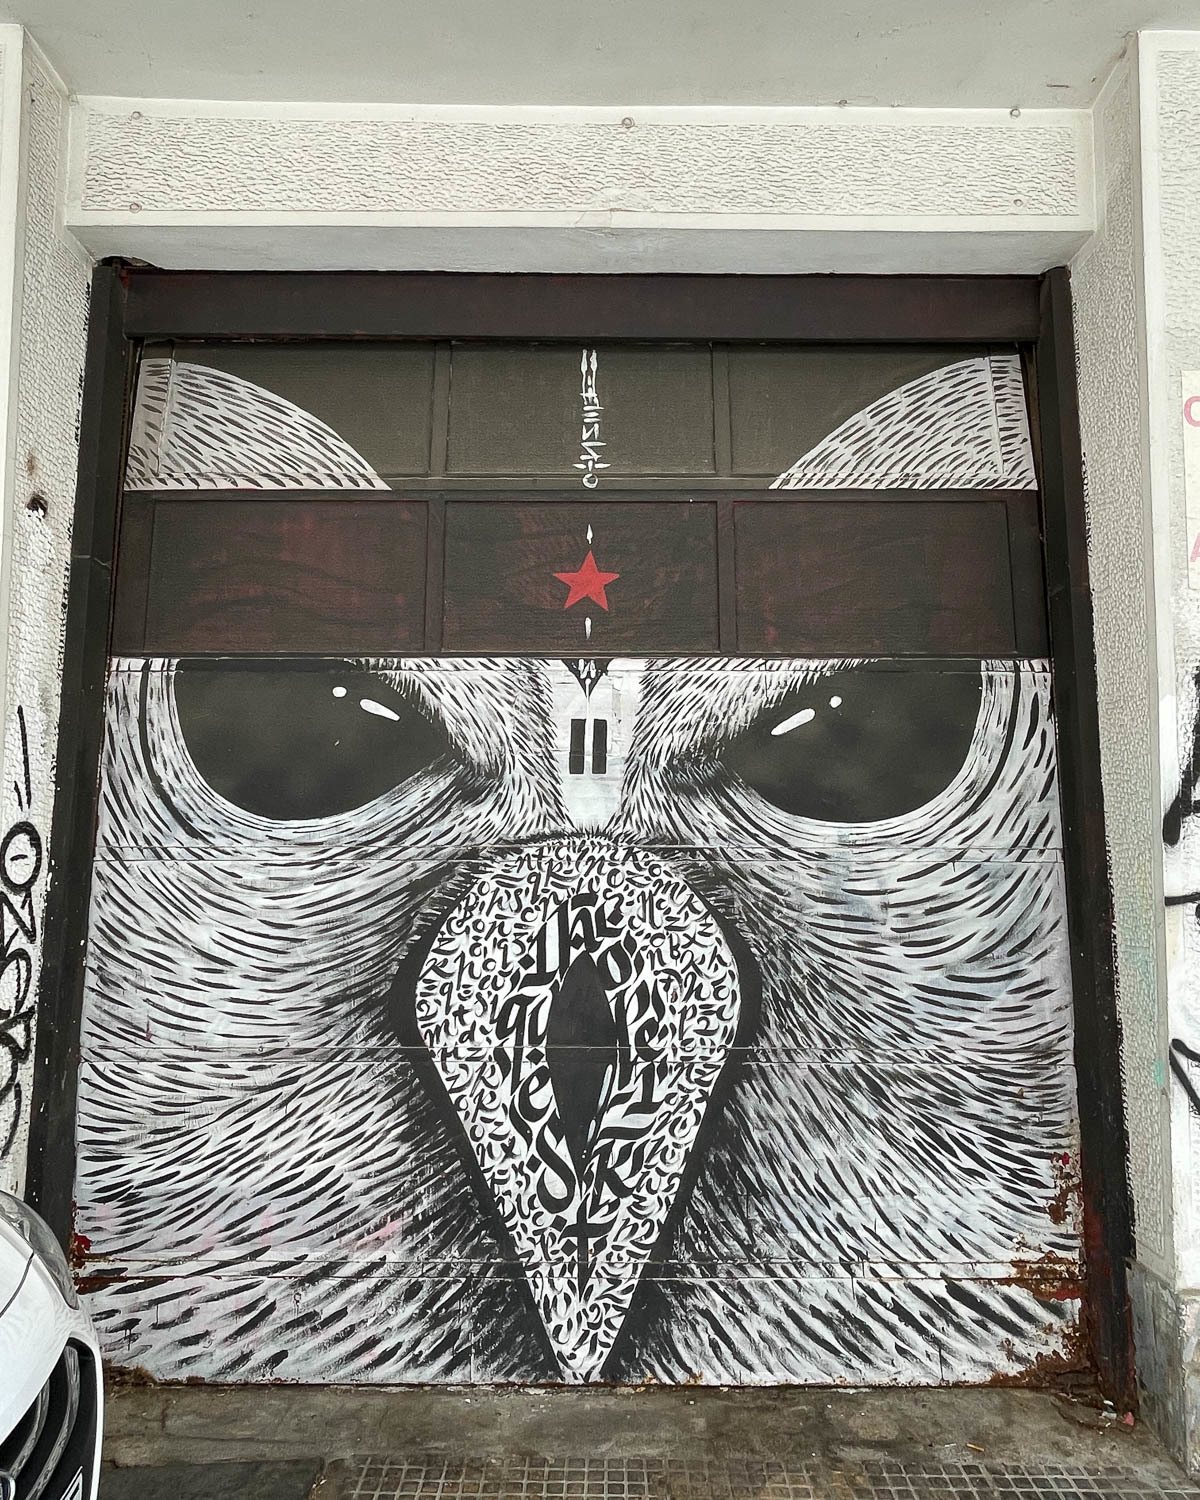 Owl mural by Blaqk in Psiri Athens Photo Heatheronhertravels.com